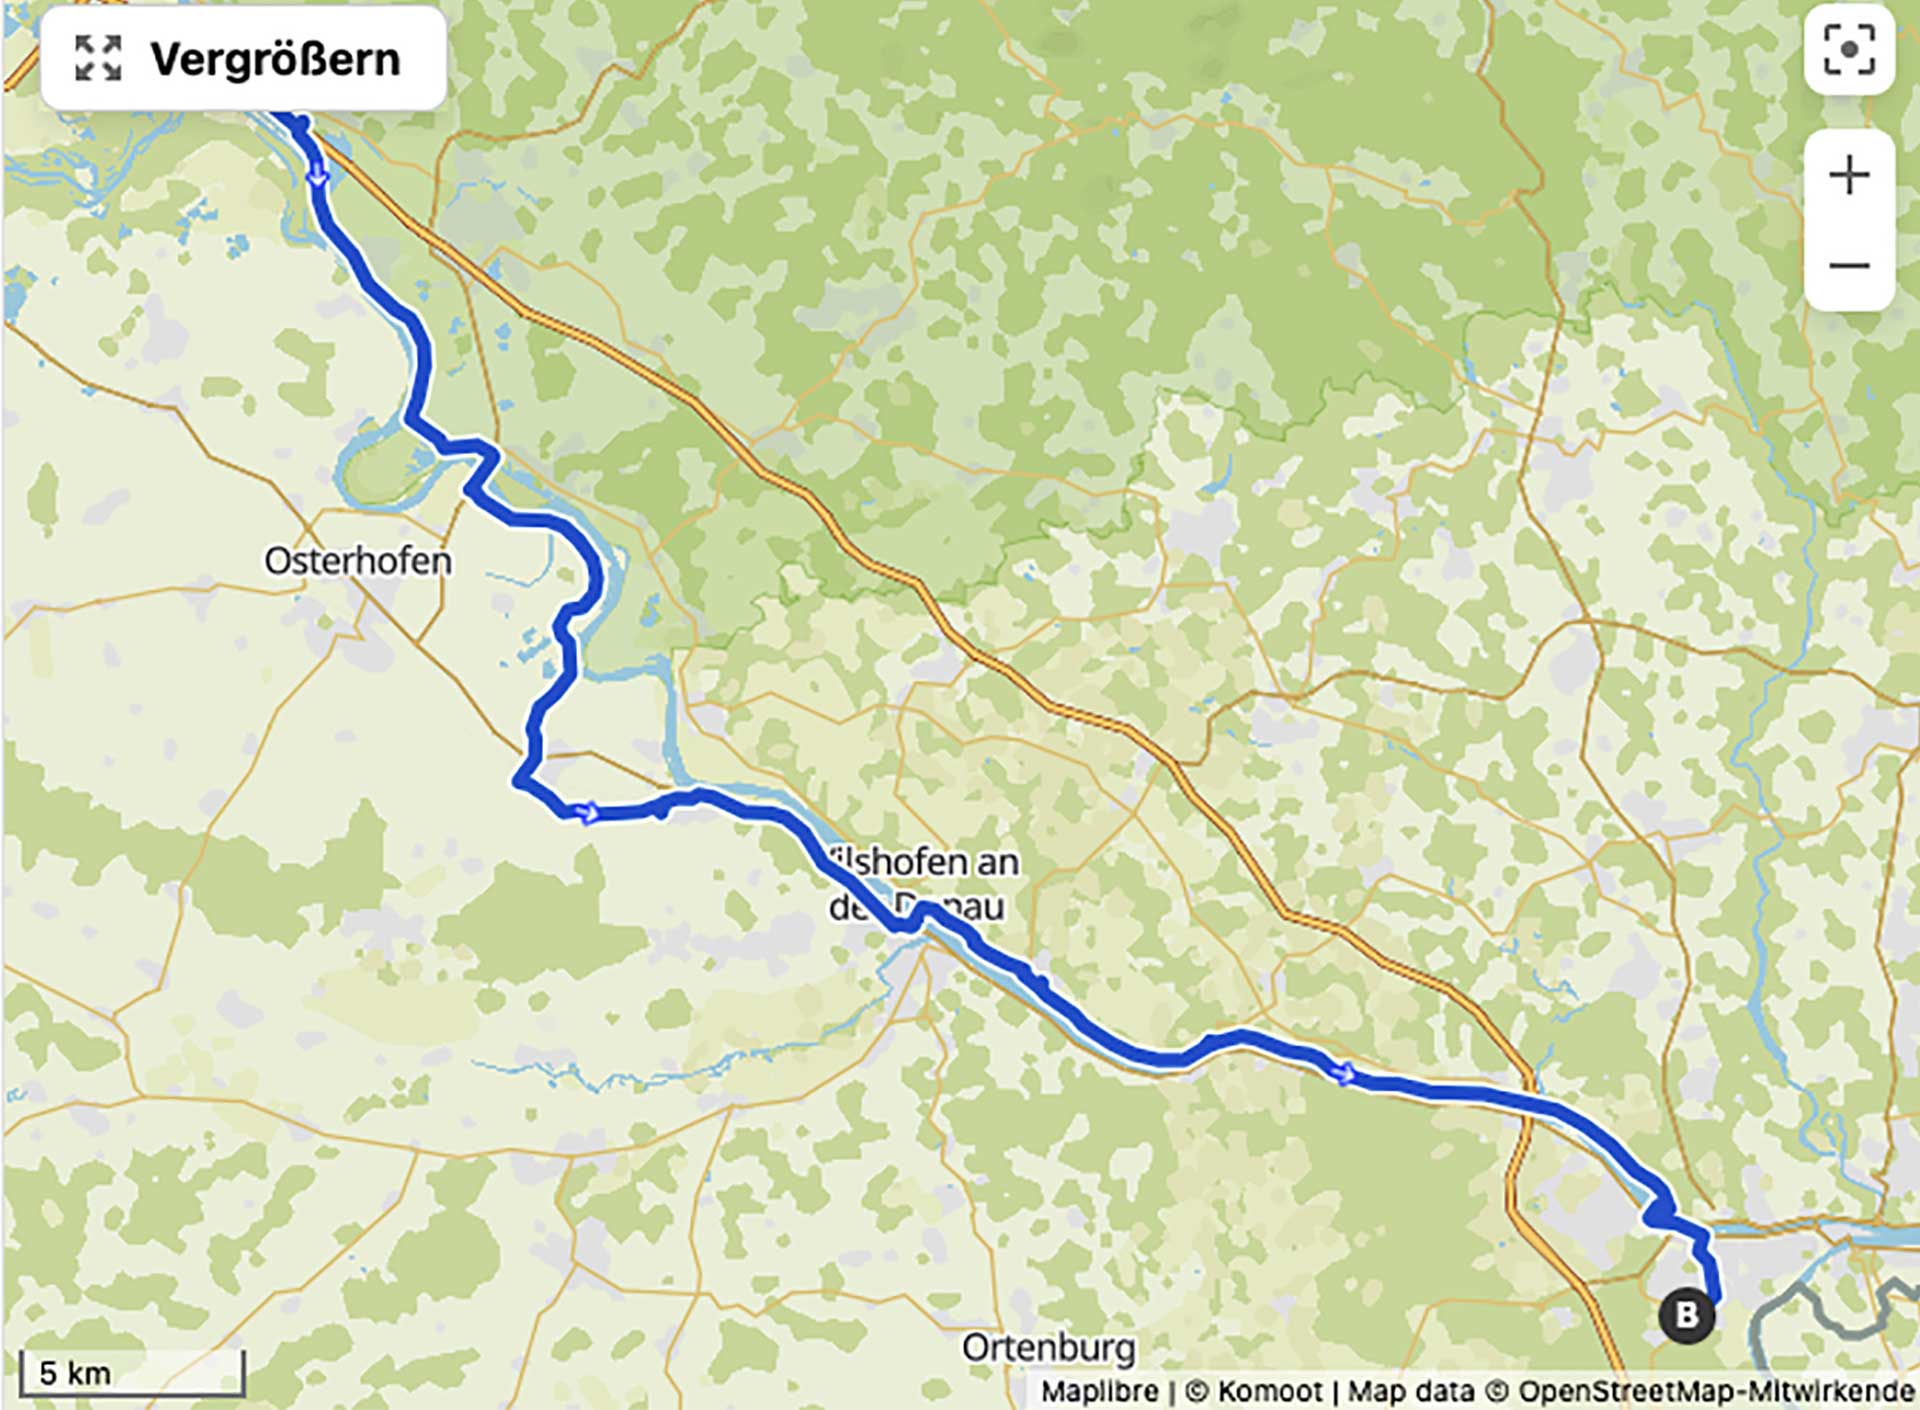 Route Straubing - Deggendorf - Passau